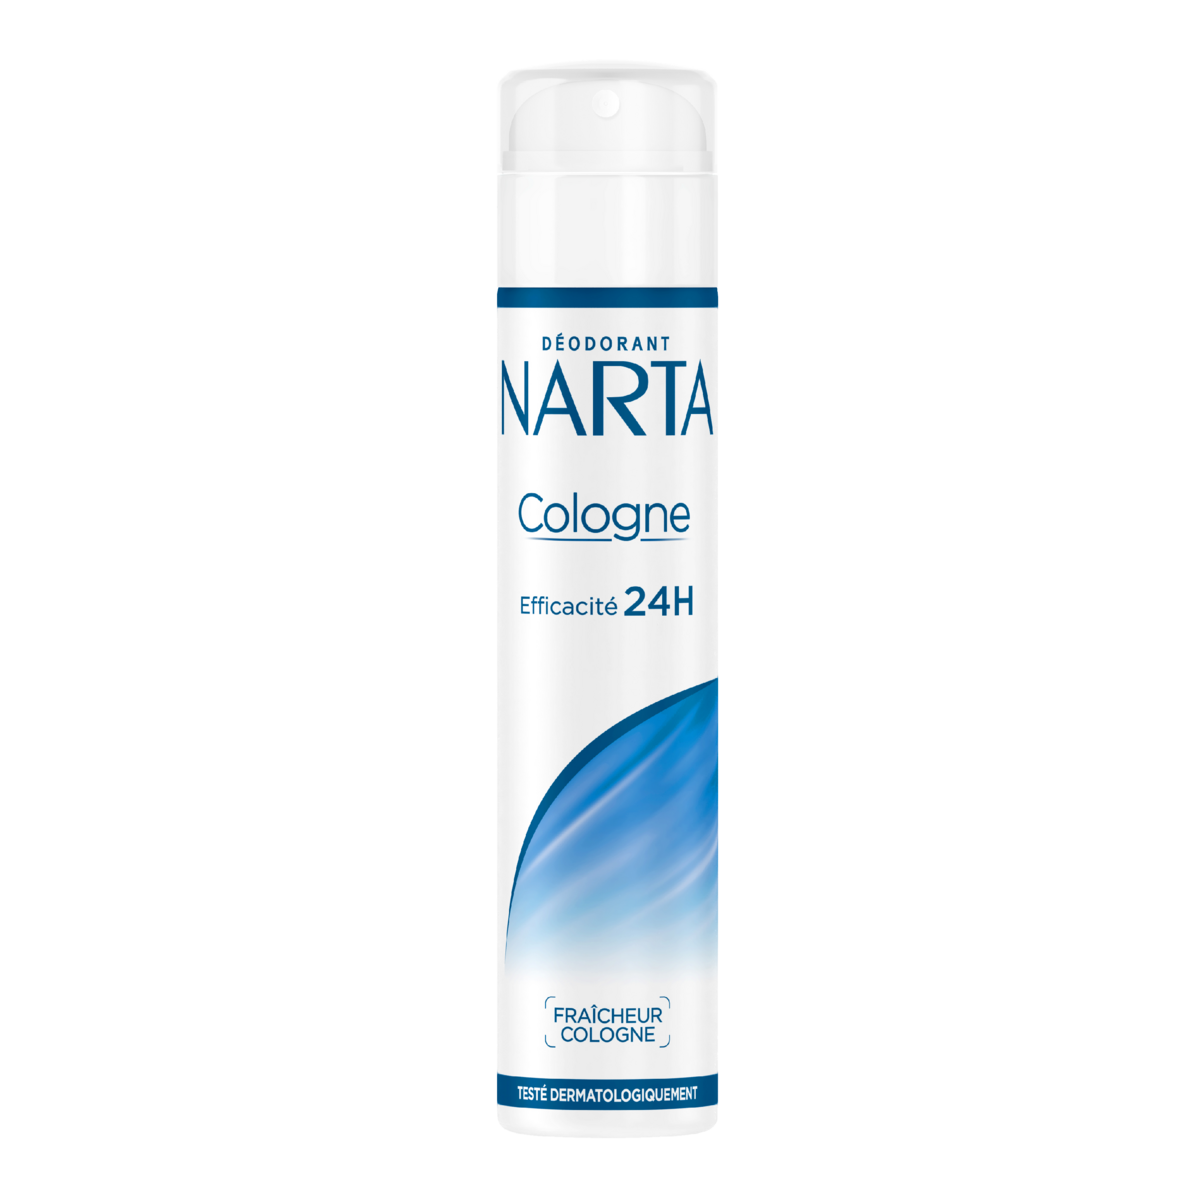 NARTA Deodorant spray fresh cologne 200ml -J83